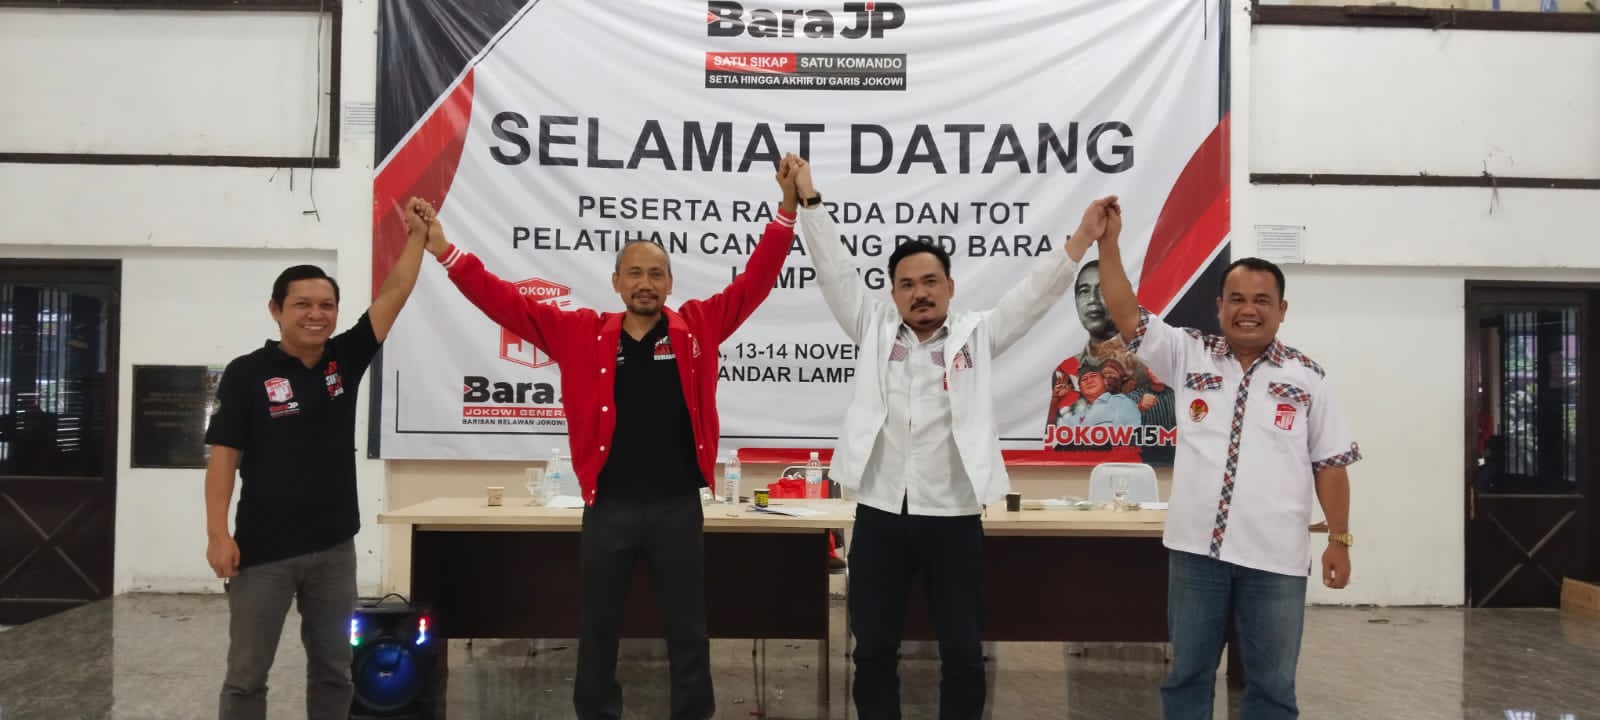 Bara JP Lampung Menargetkan RAP Canvassing Jangkau 600.000 suara